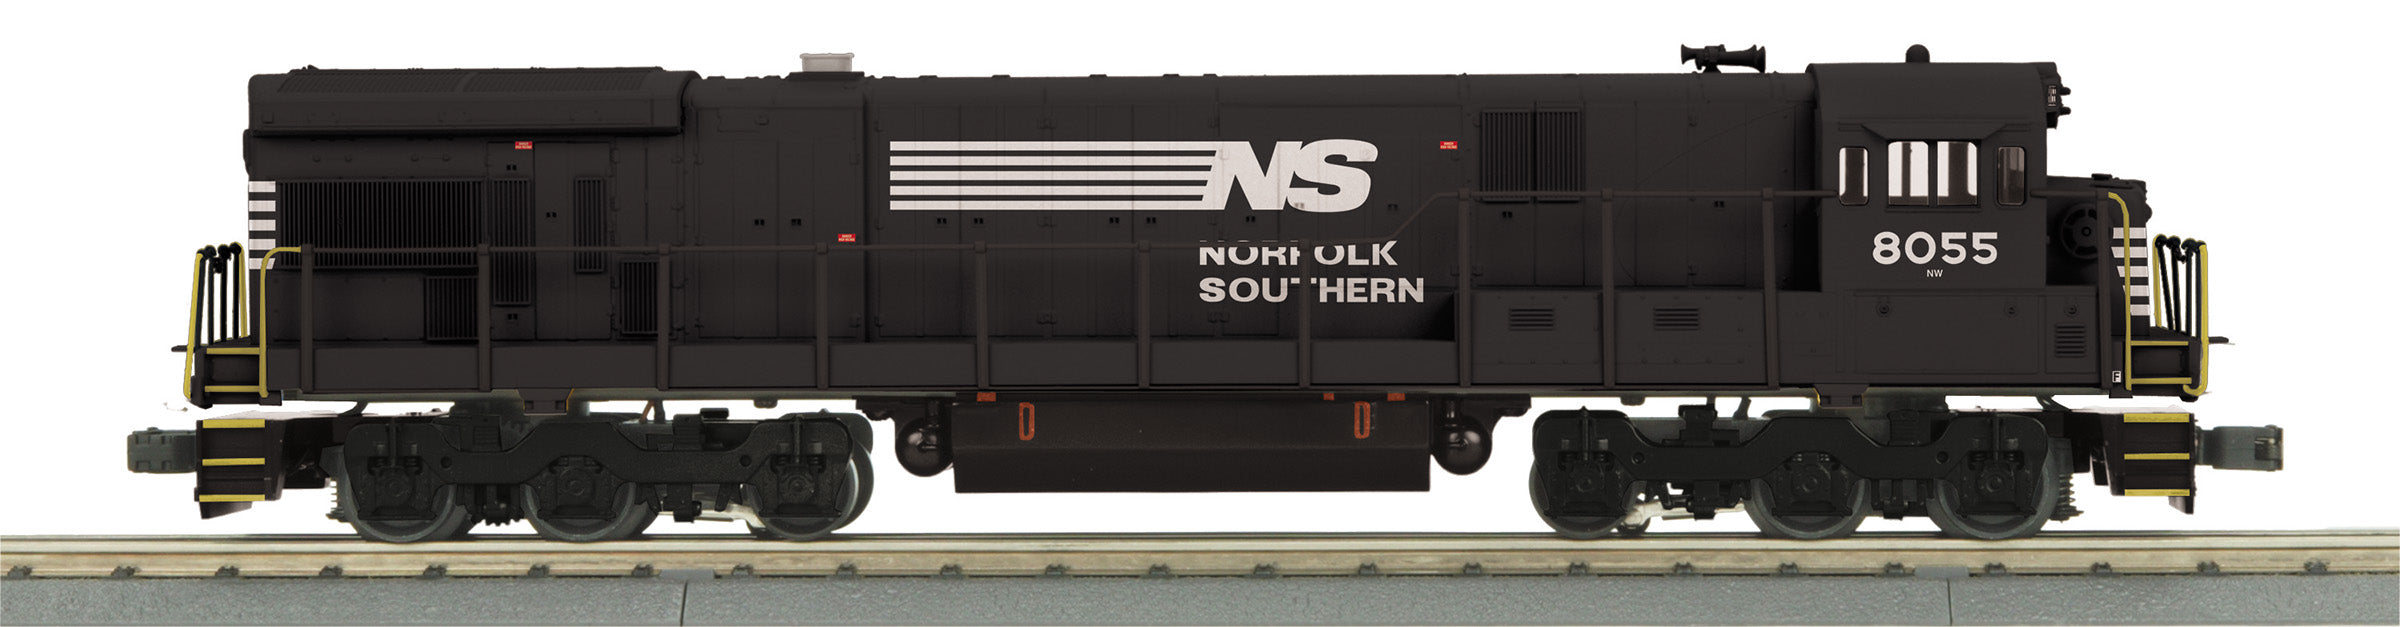 MTH 30-21264-1 - C30-7 Diesel Engine "Norfolk Southern" #8055 w/ PS3